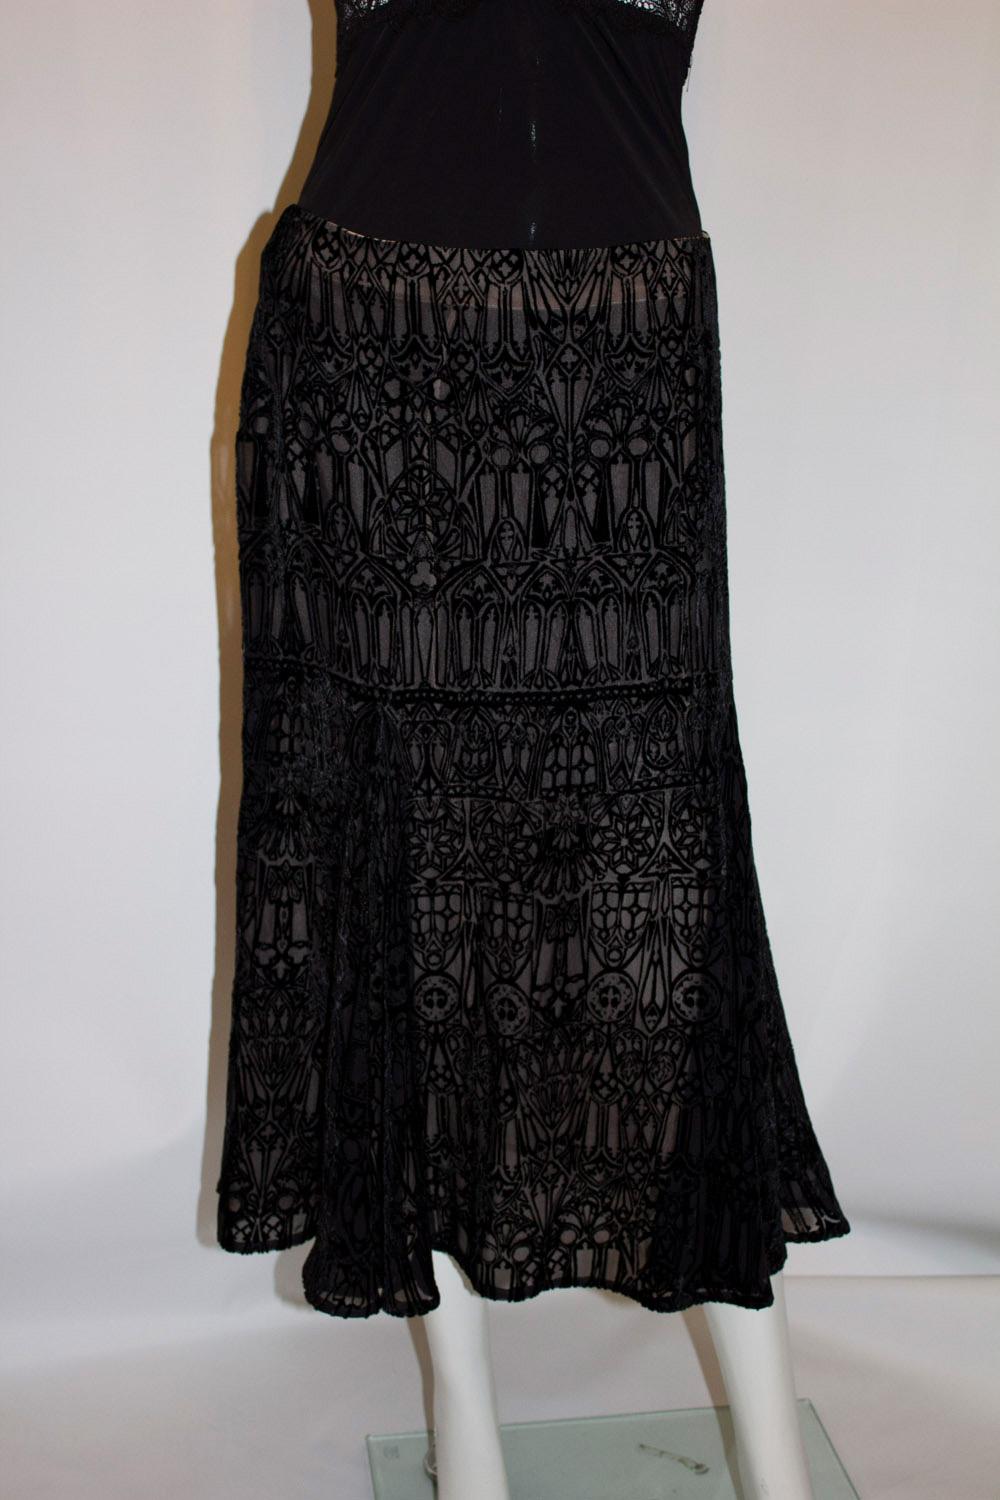 Alexander Mc Queen Devoree Velvet Silk Lined Skirt In Good Condition For Sale In London, GB